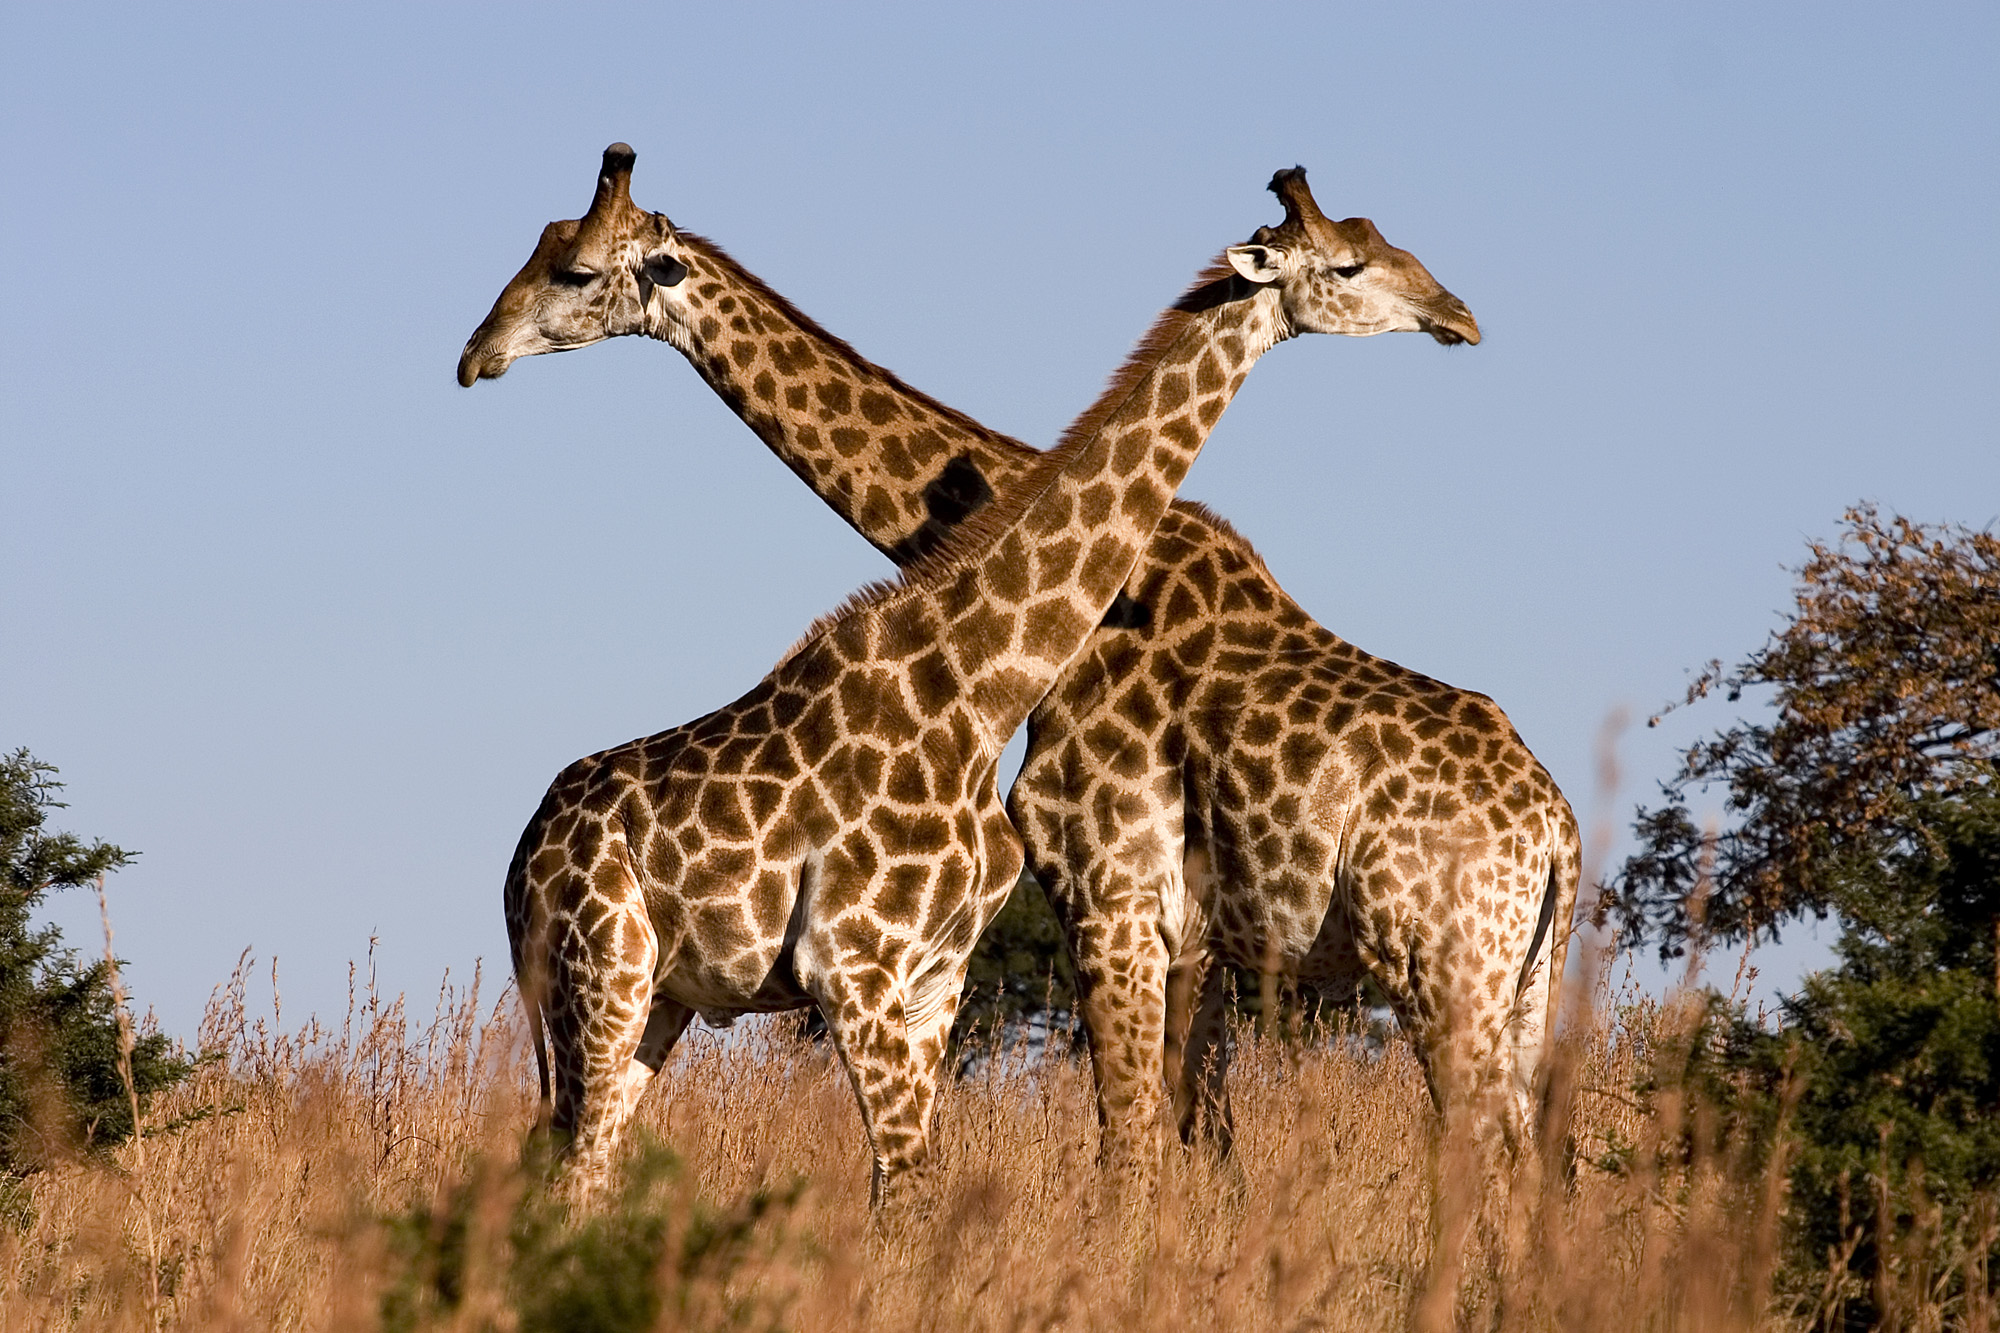 Giraffe_Ithala_KZN_South_Africa_Luca_Galuzzi_2004.JPG